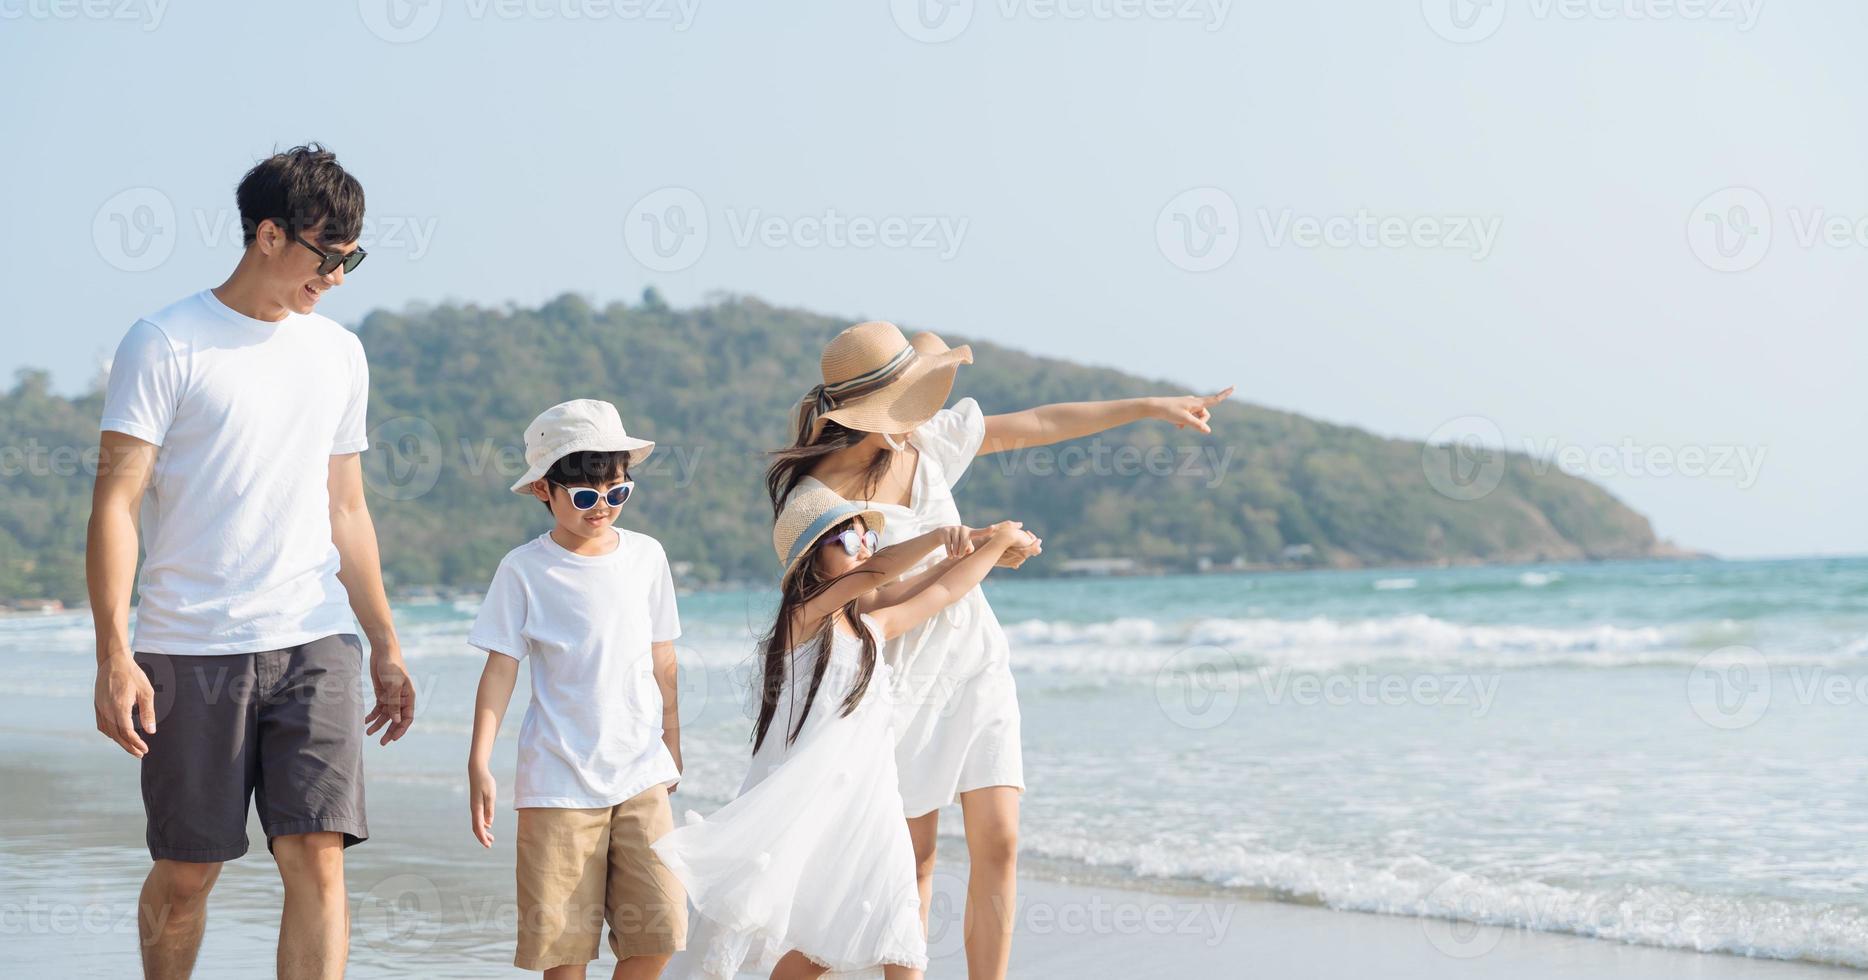 asiatisk familj går på stranden med barn glad semester koncept foto